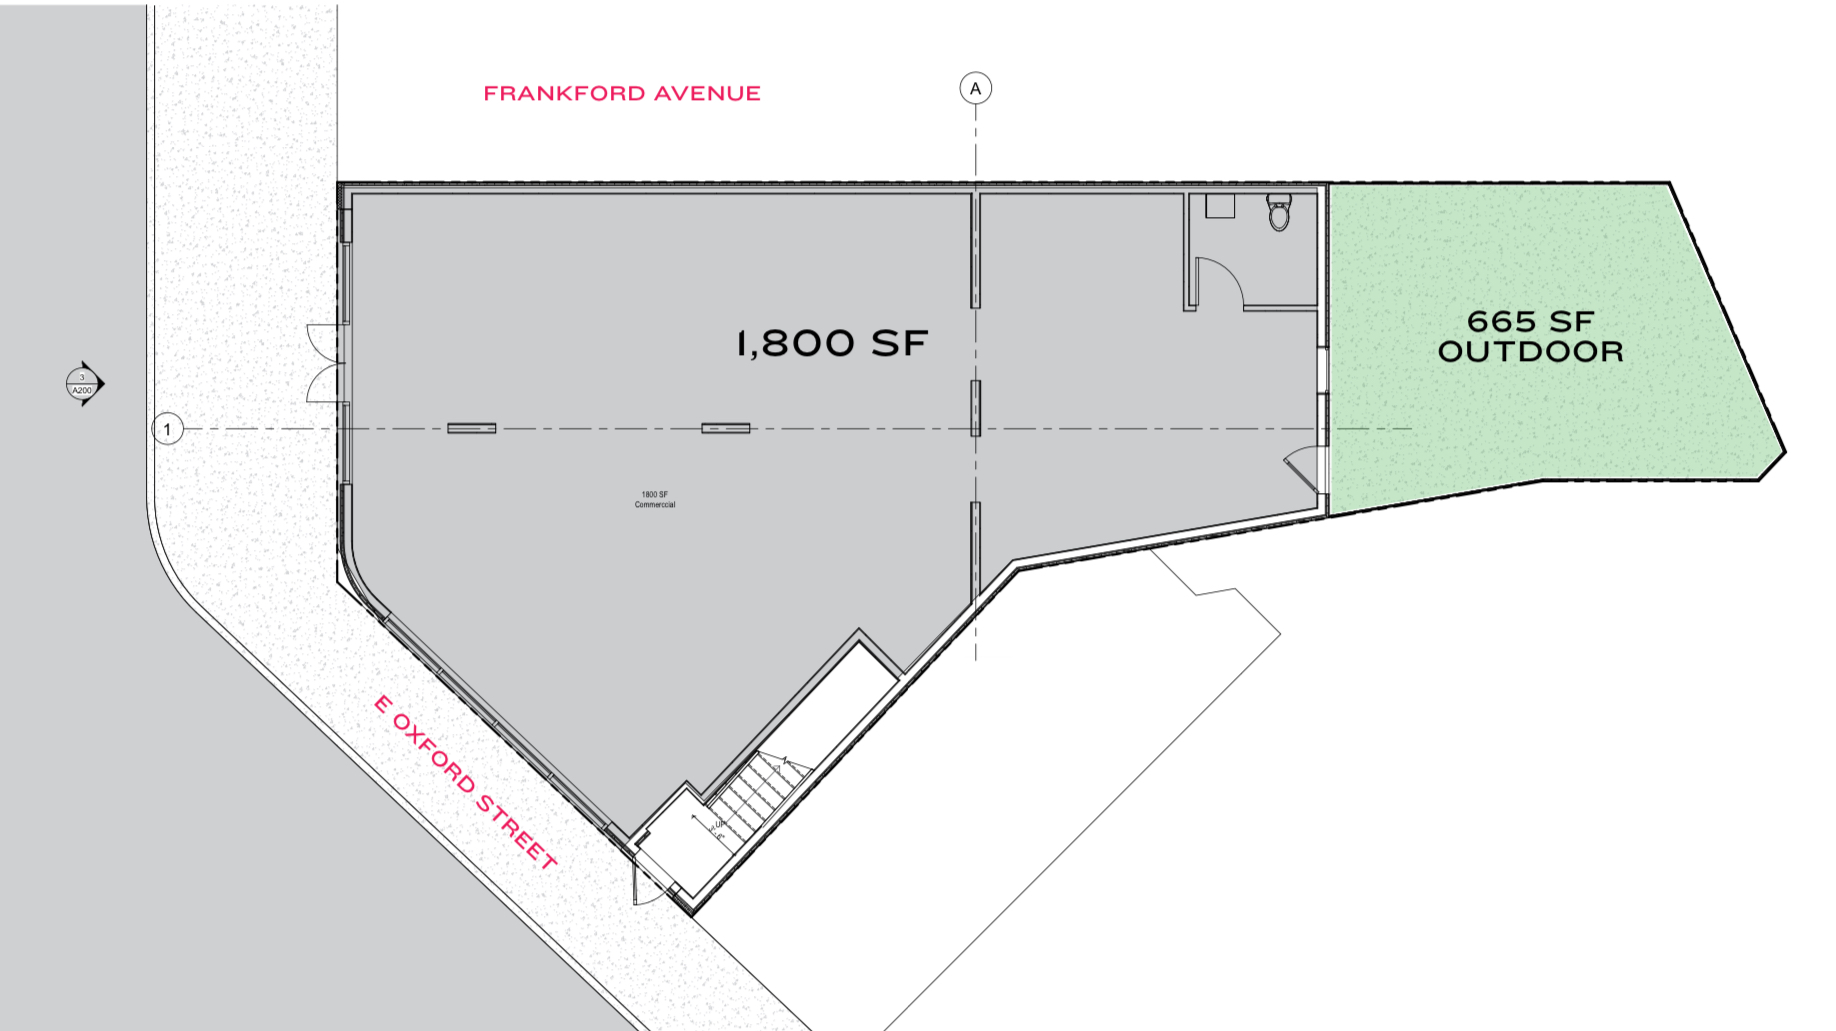 1601 Frankford Avenue. Ground level floor plan